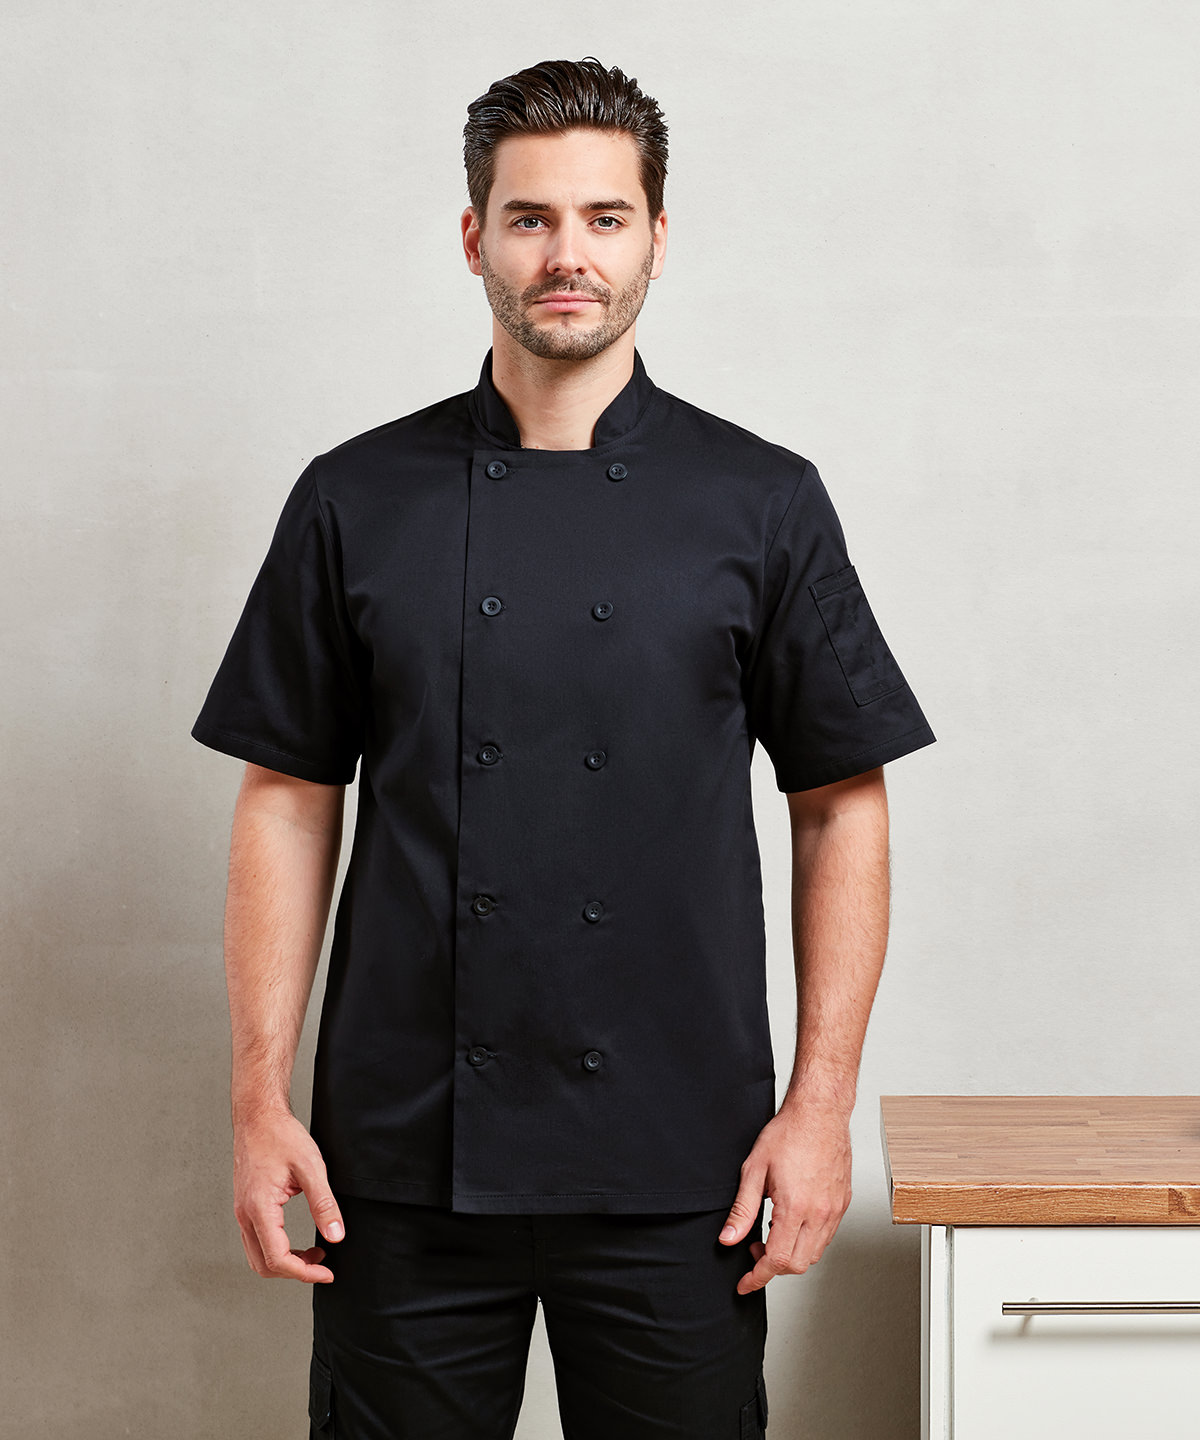 Short sleeve chefs jacket